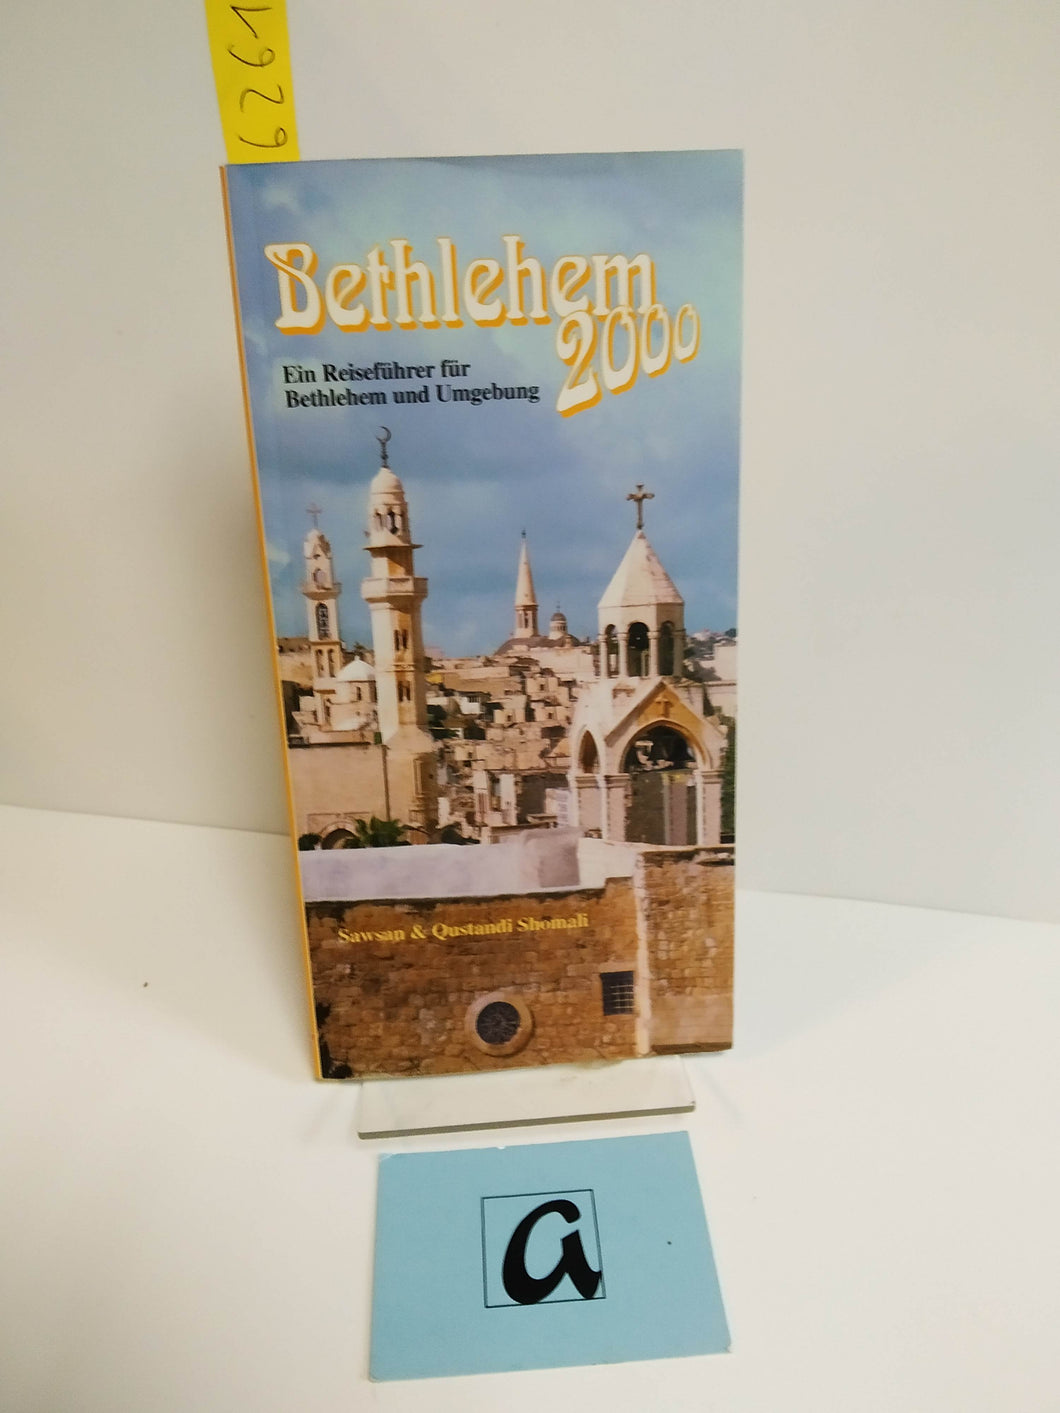 Bethlehem 2000